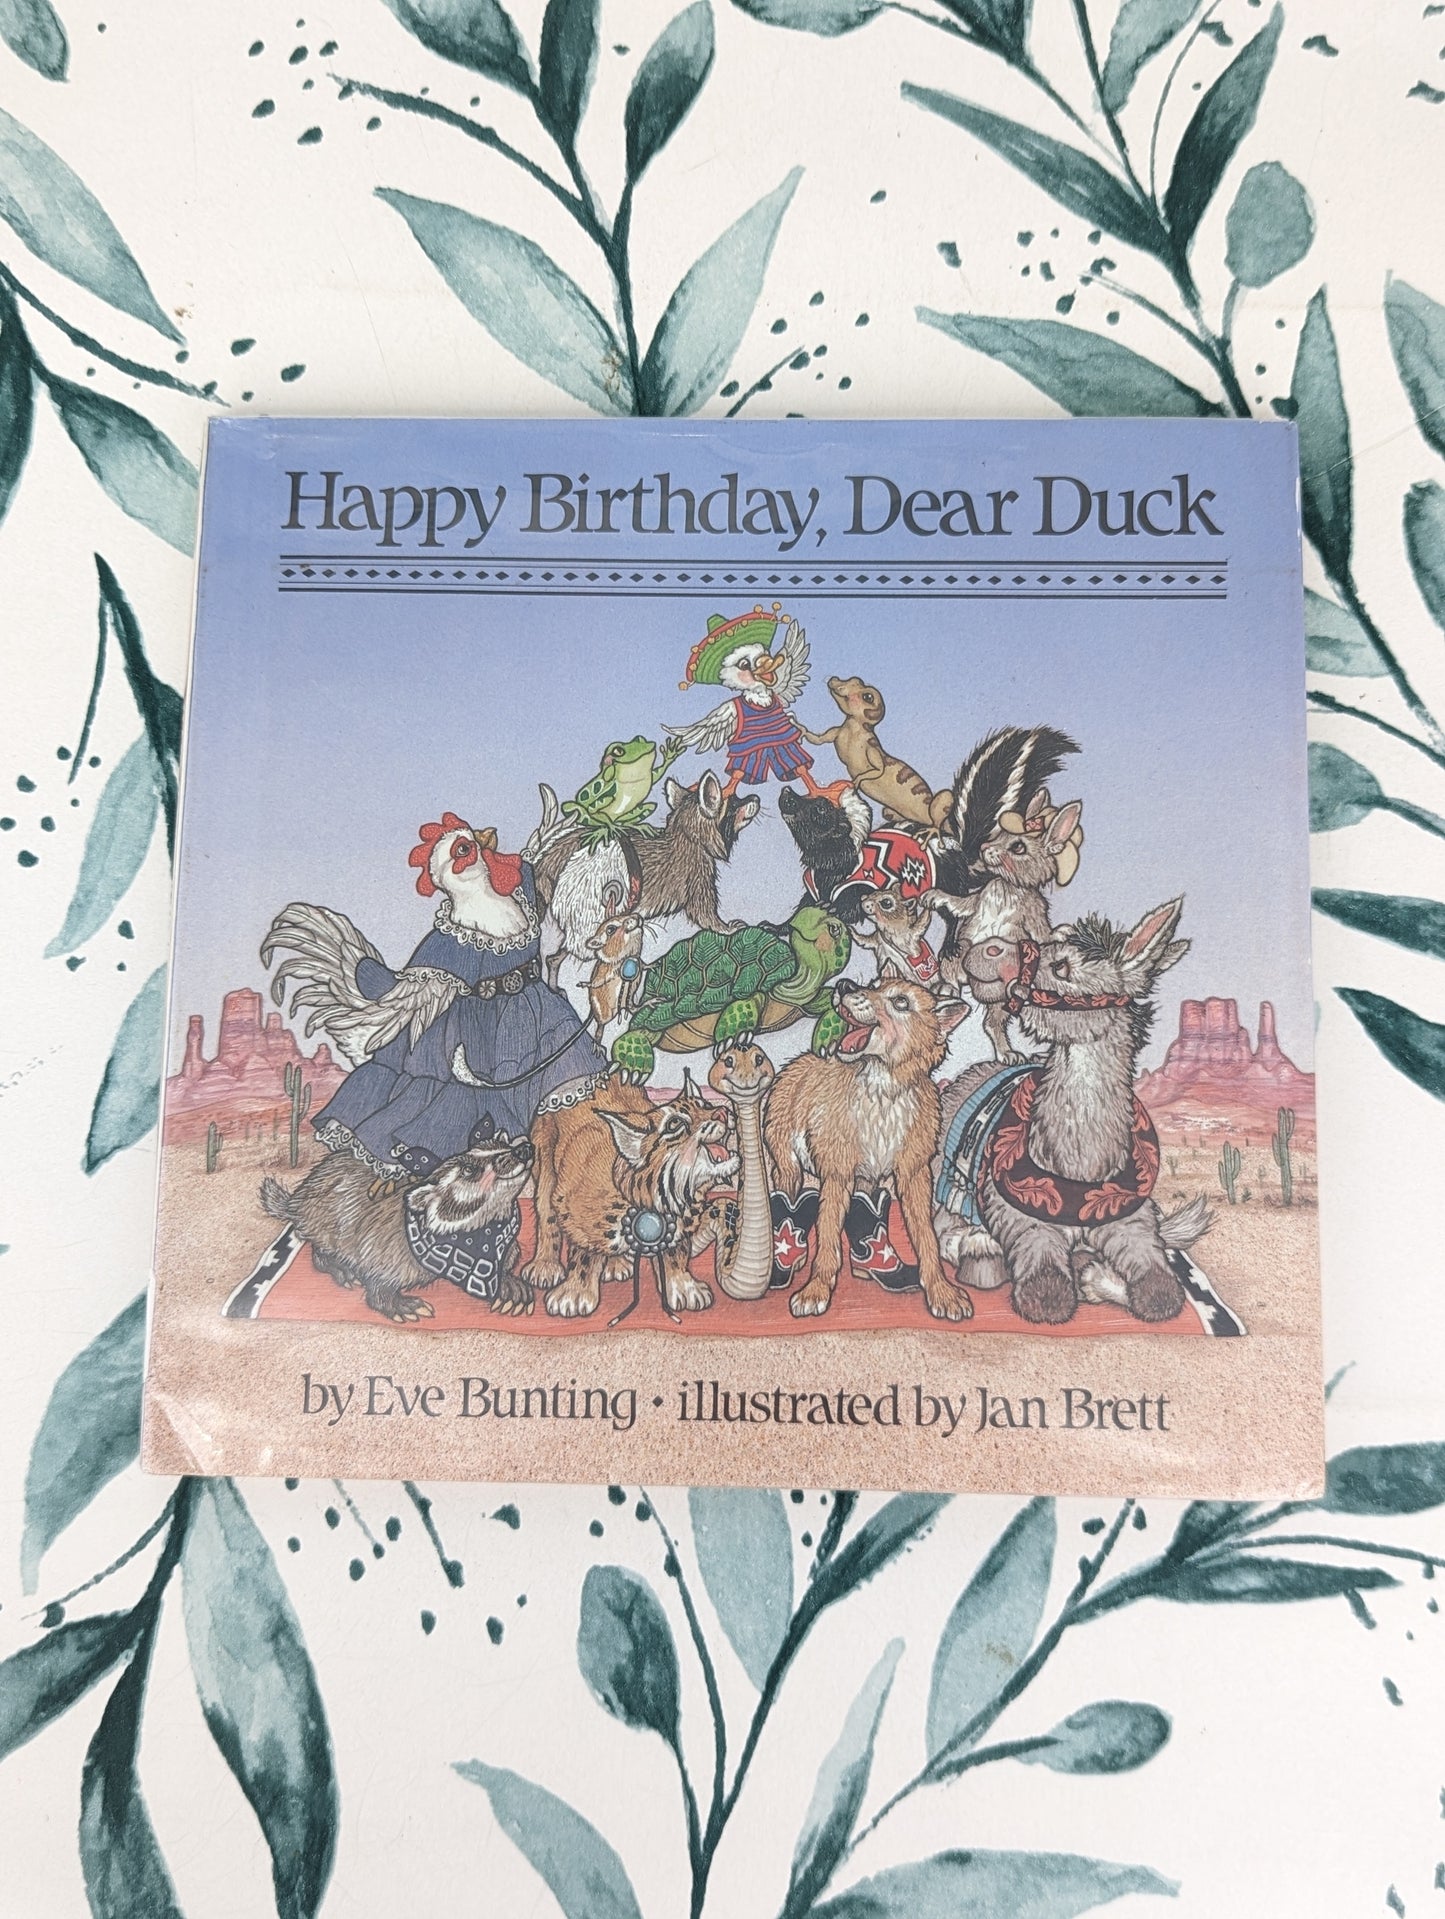 Happy Birthday, Dear Duck (Eve Bunting & Jan Brett)